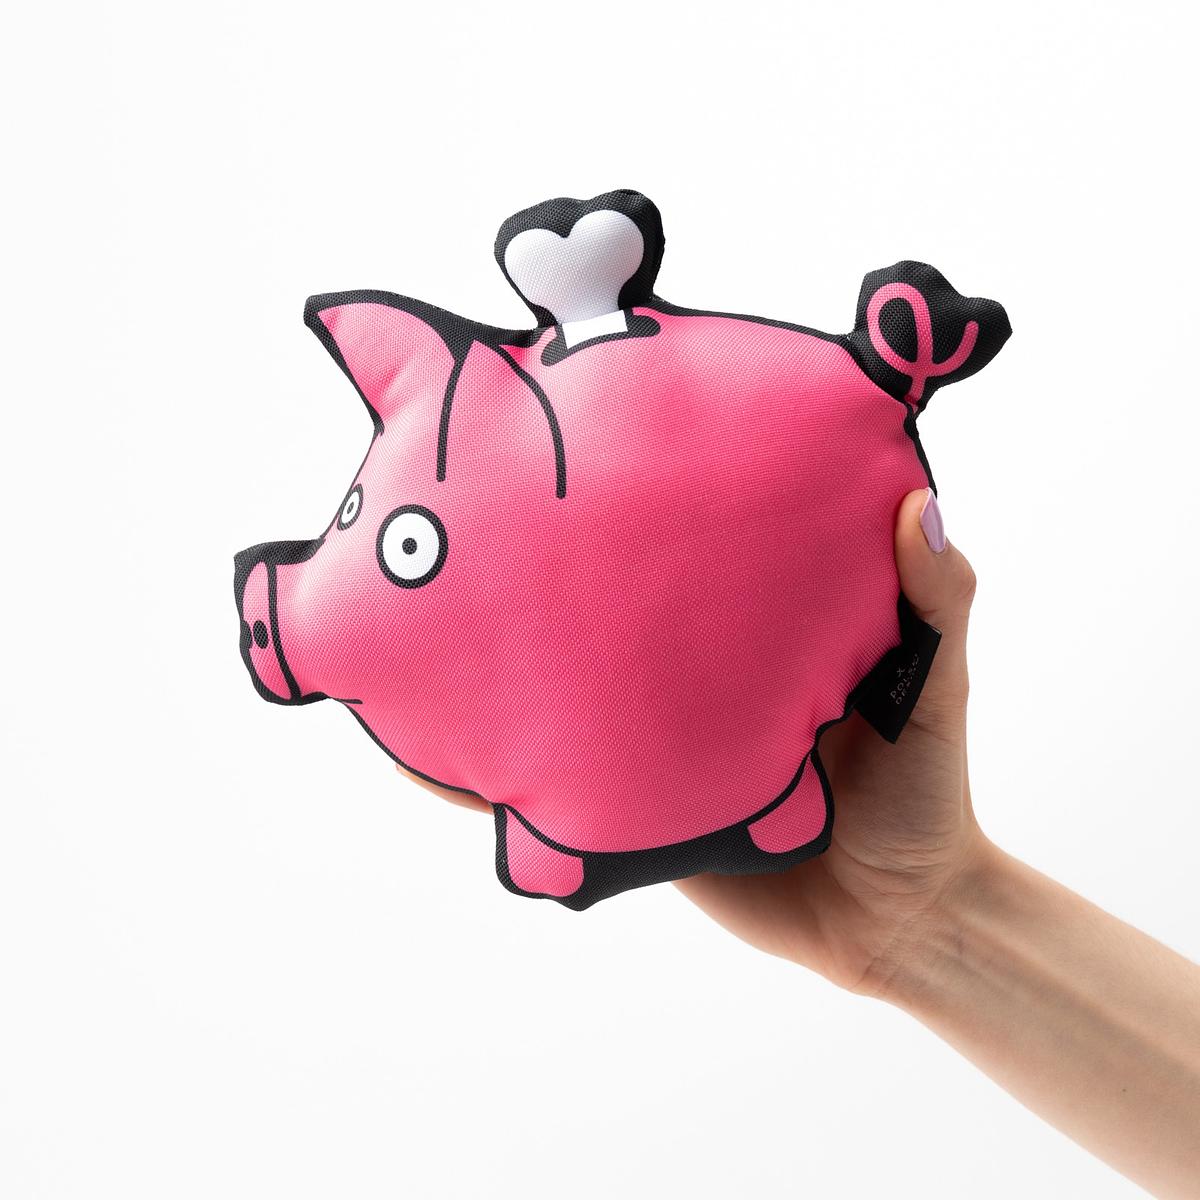 Toy "Piggy bank"